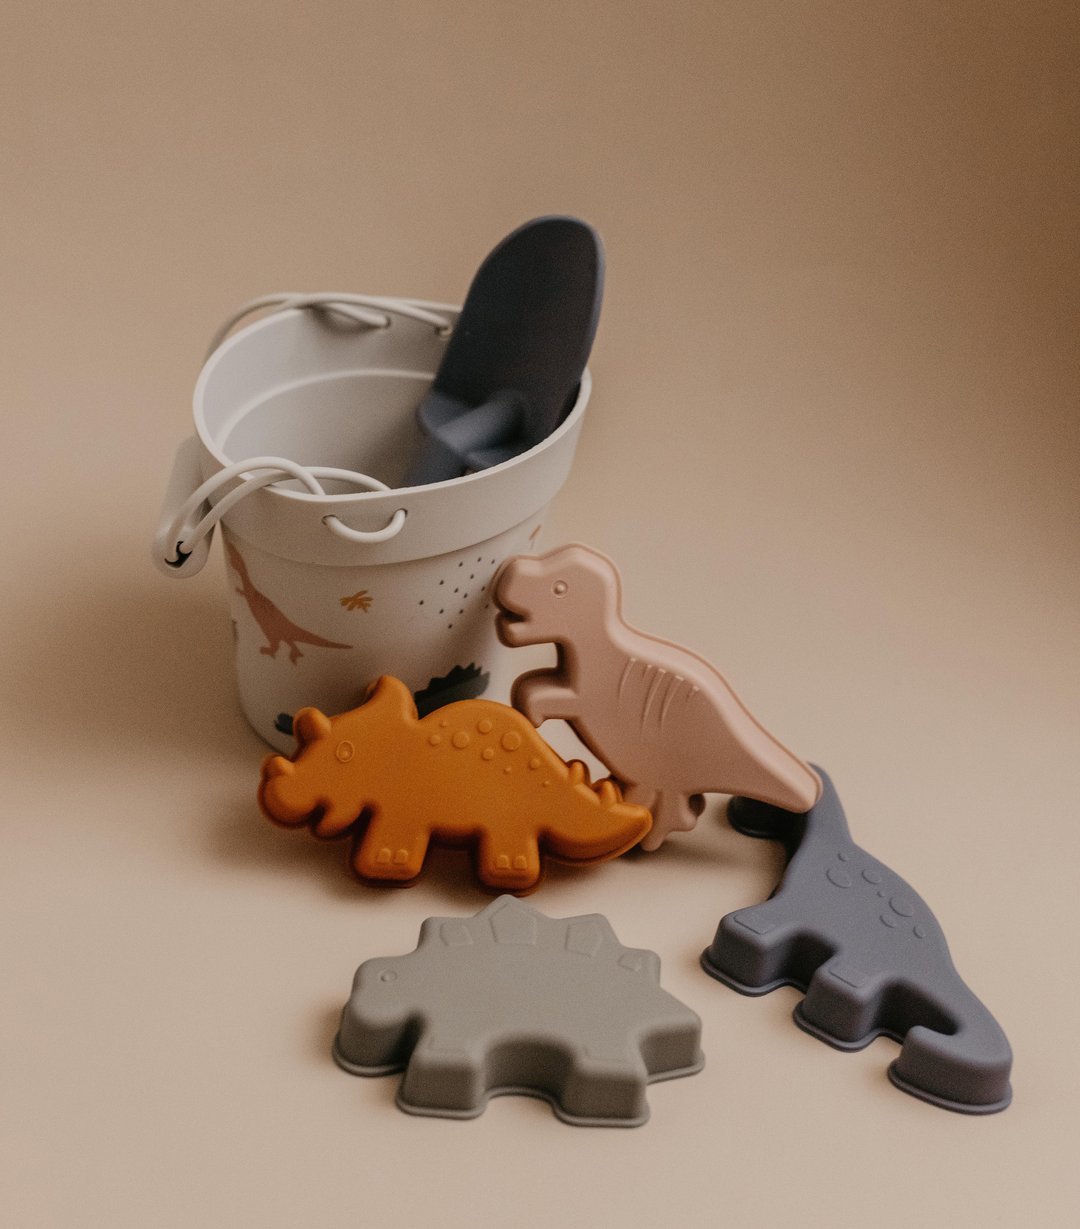 Bucket &amp; Toys Set - Dino